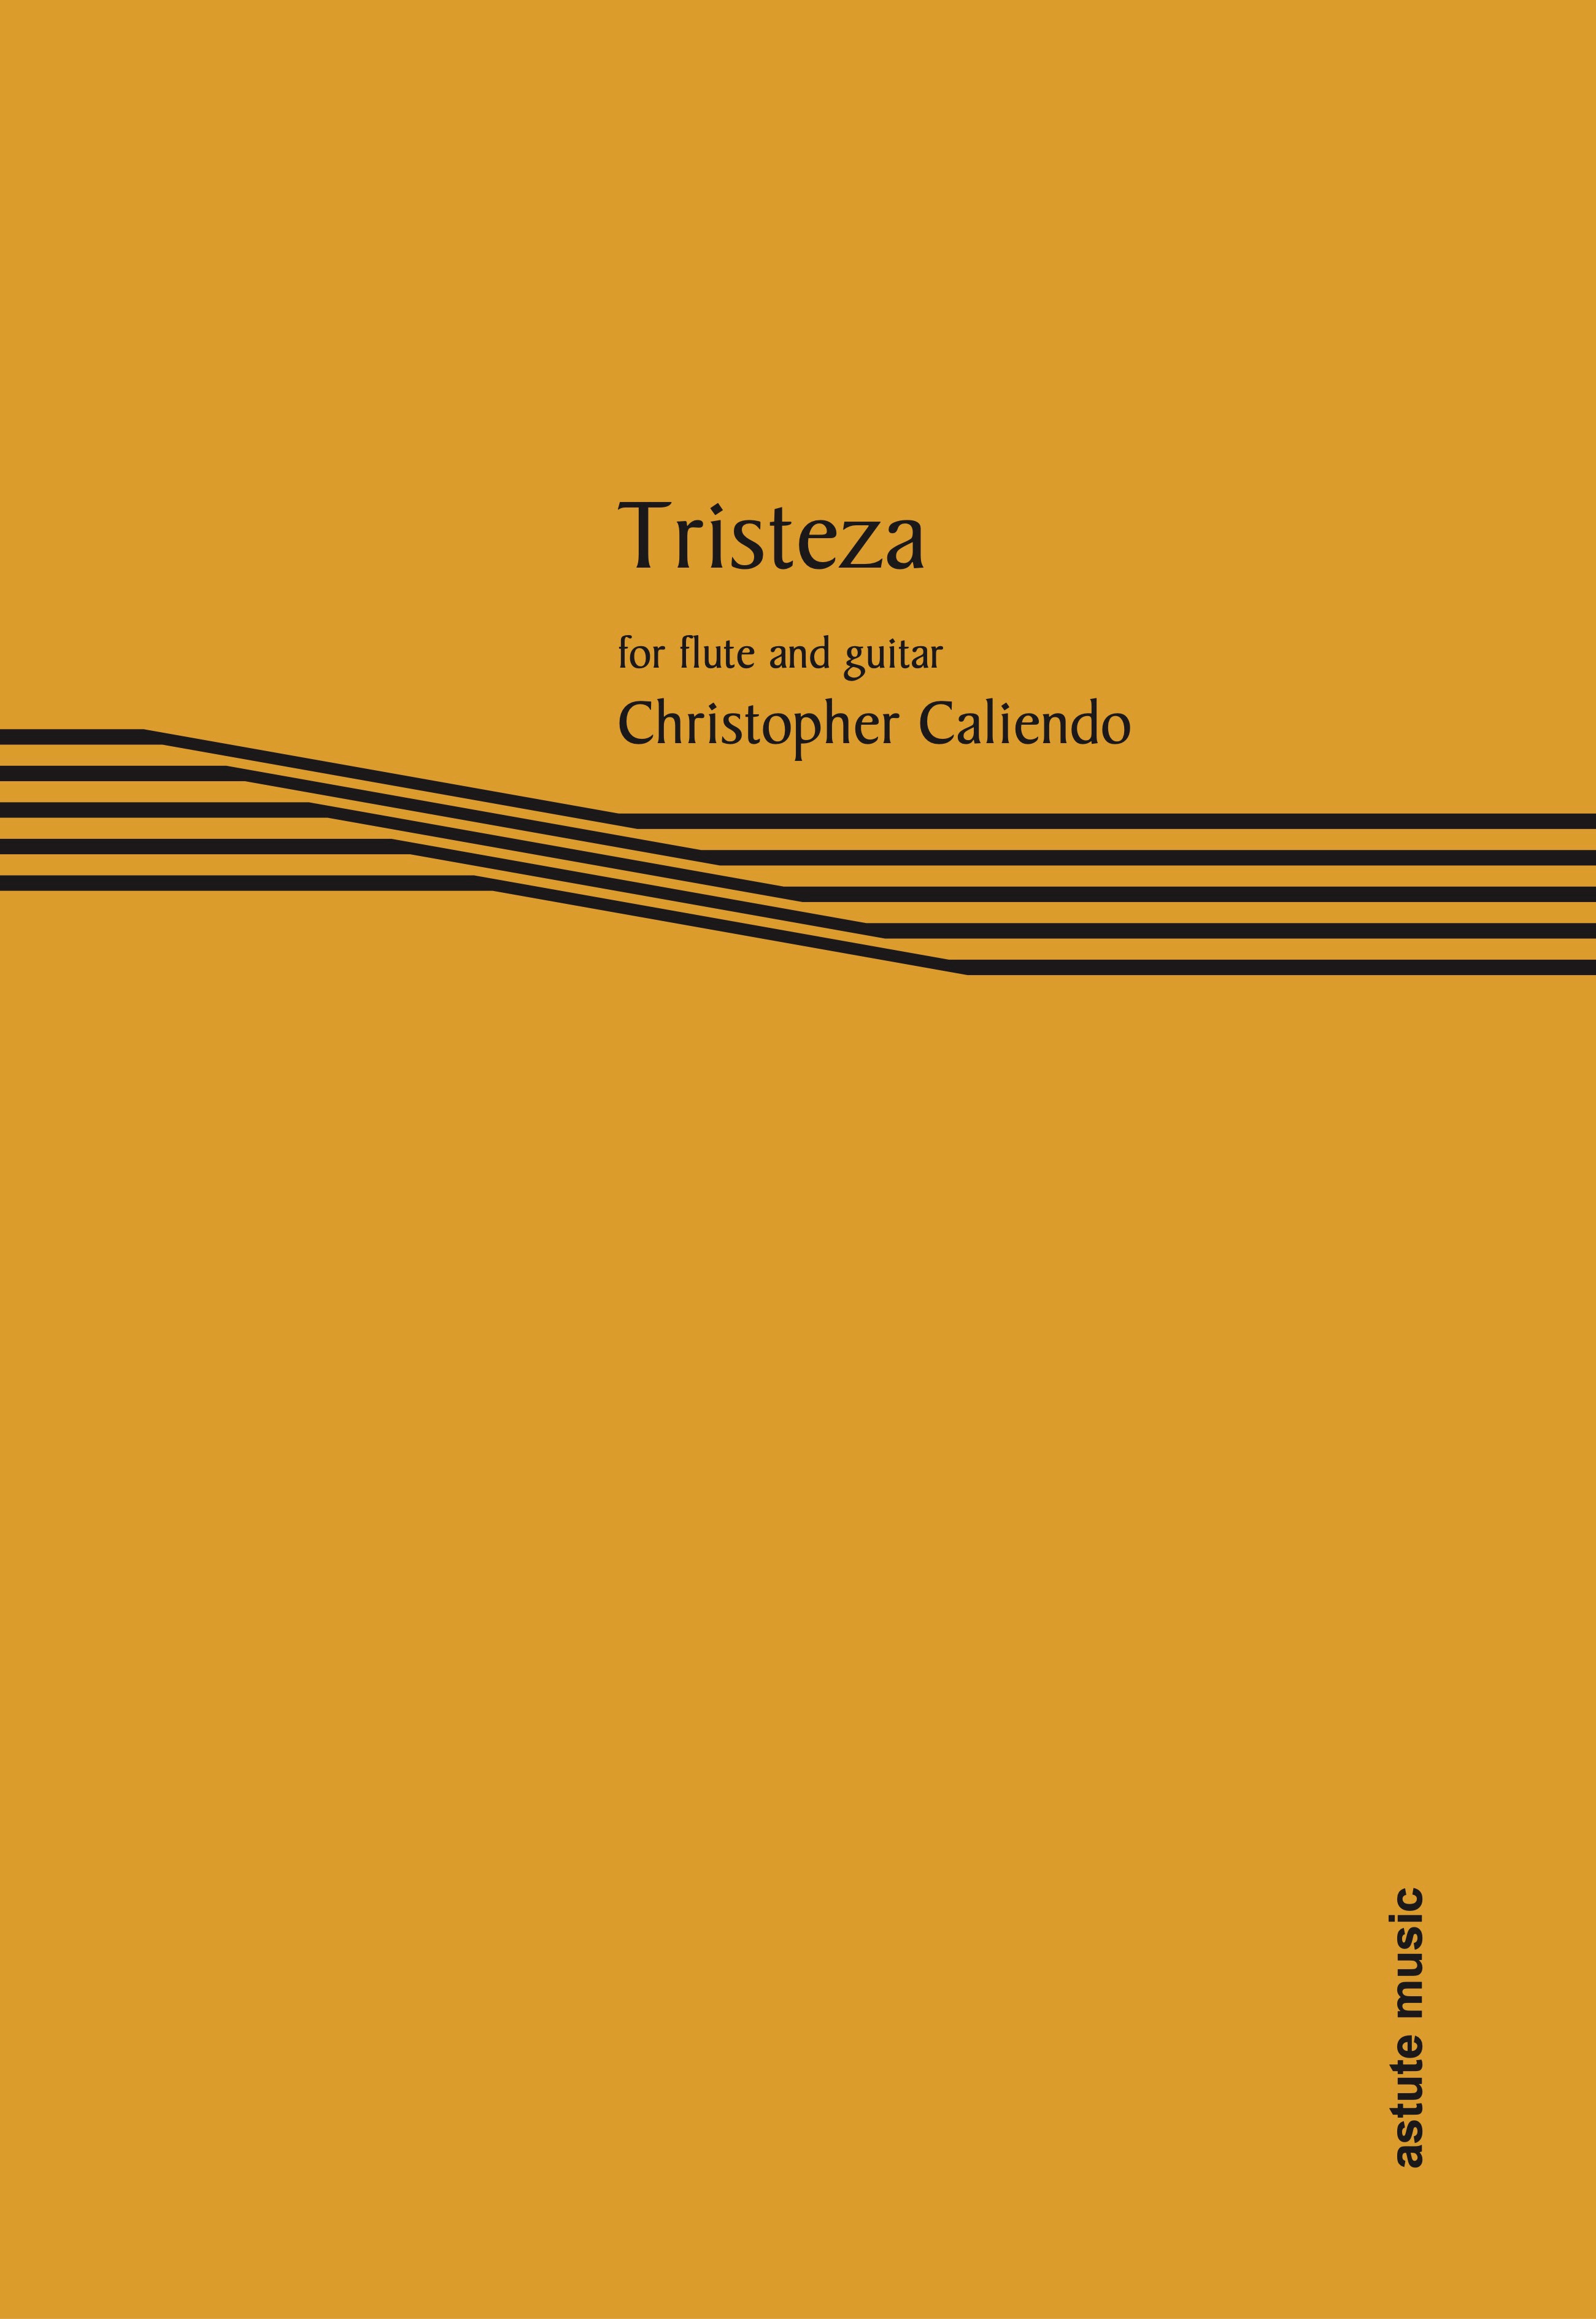 Caliendo Tristeza Flute & Guitar Sheet Music Songbook